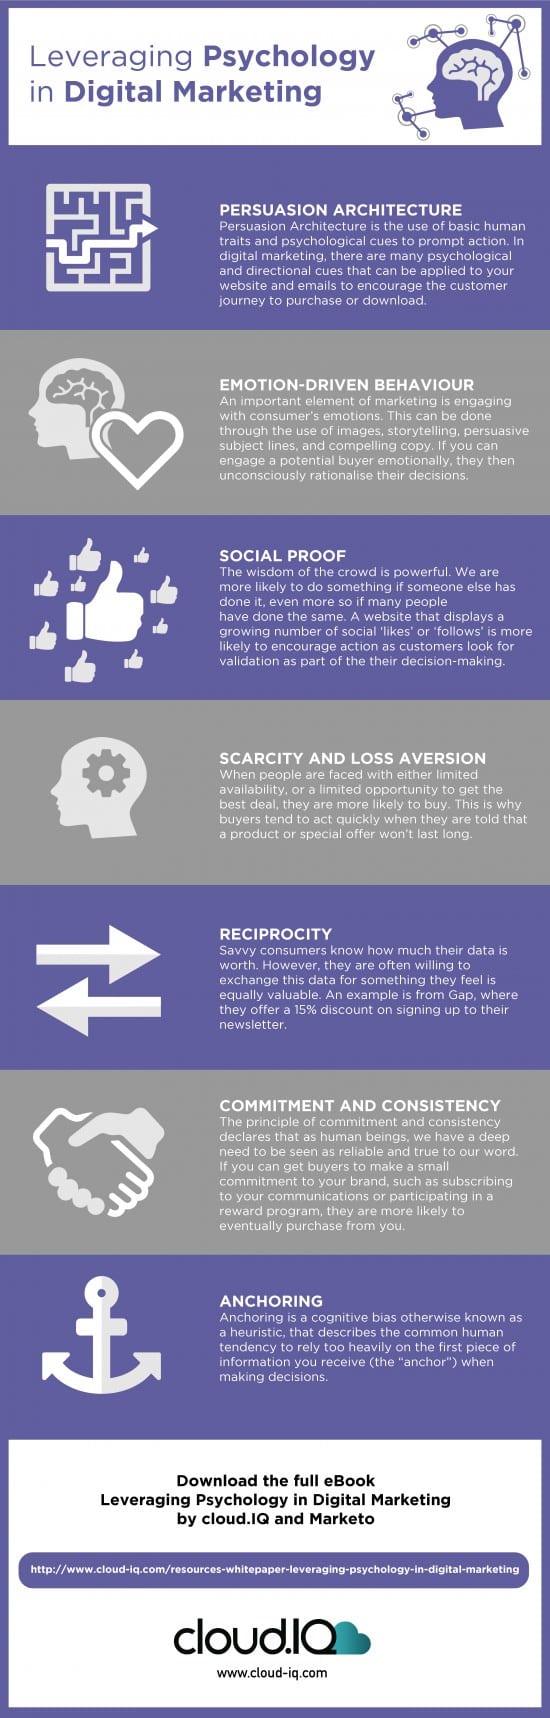 Leveraging Psychology in Digital Marketing infographic